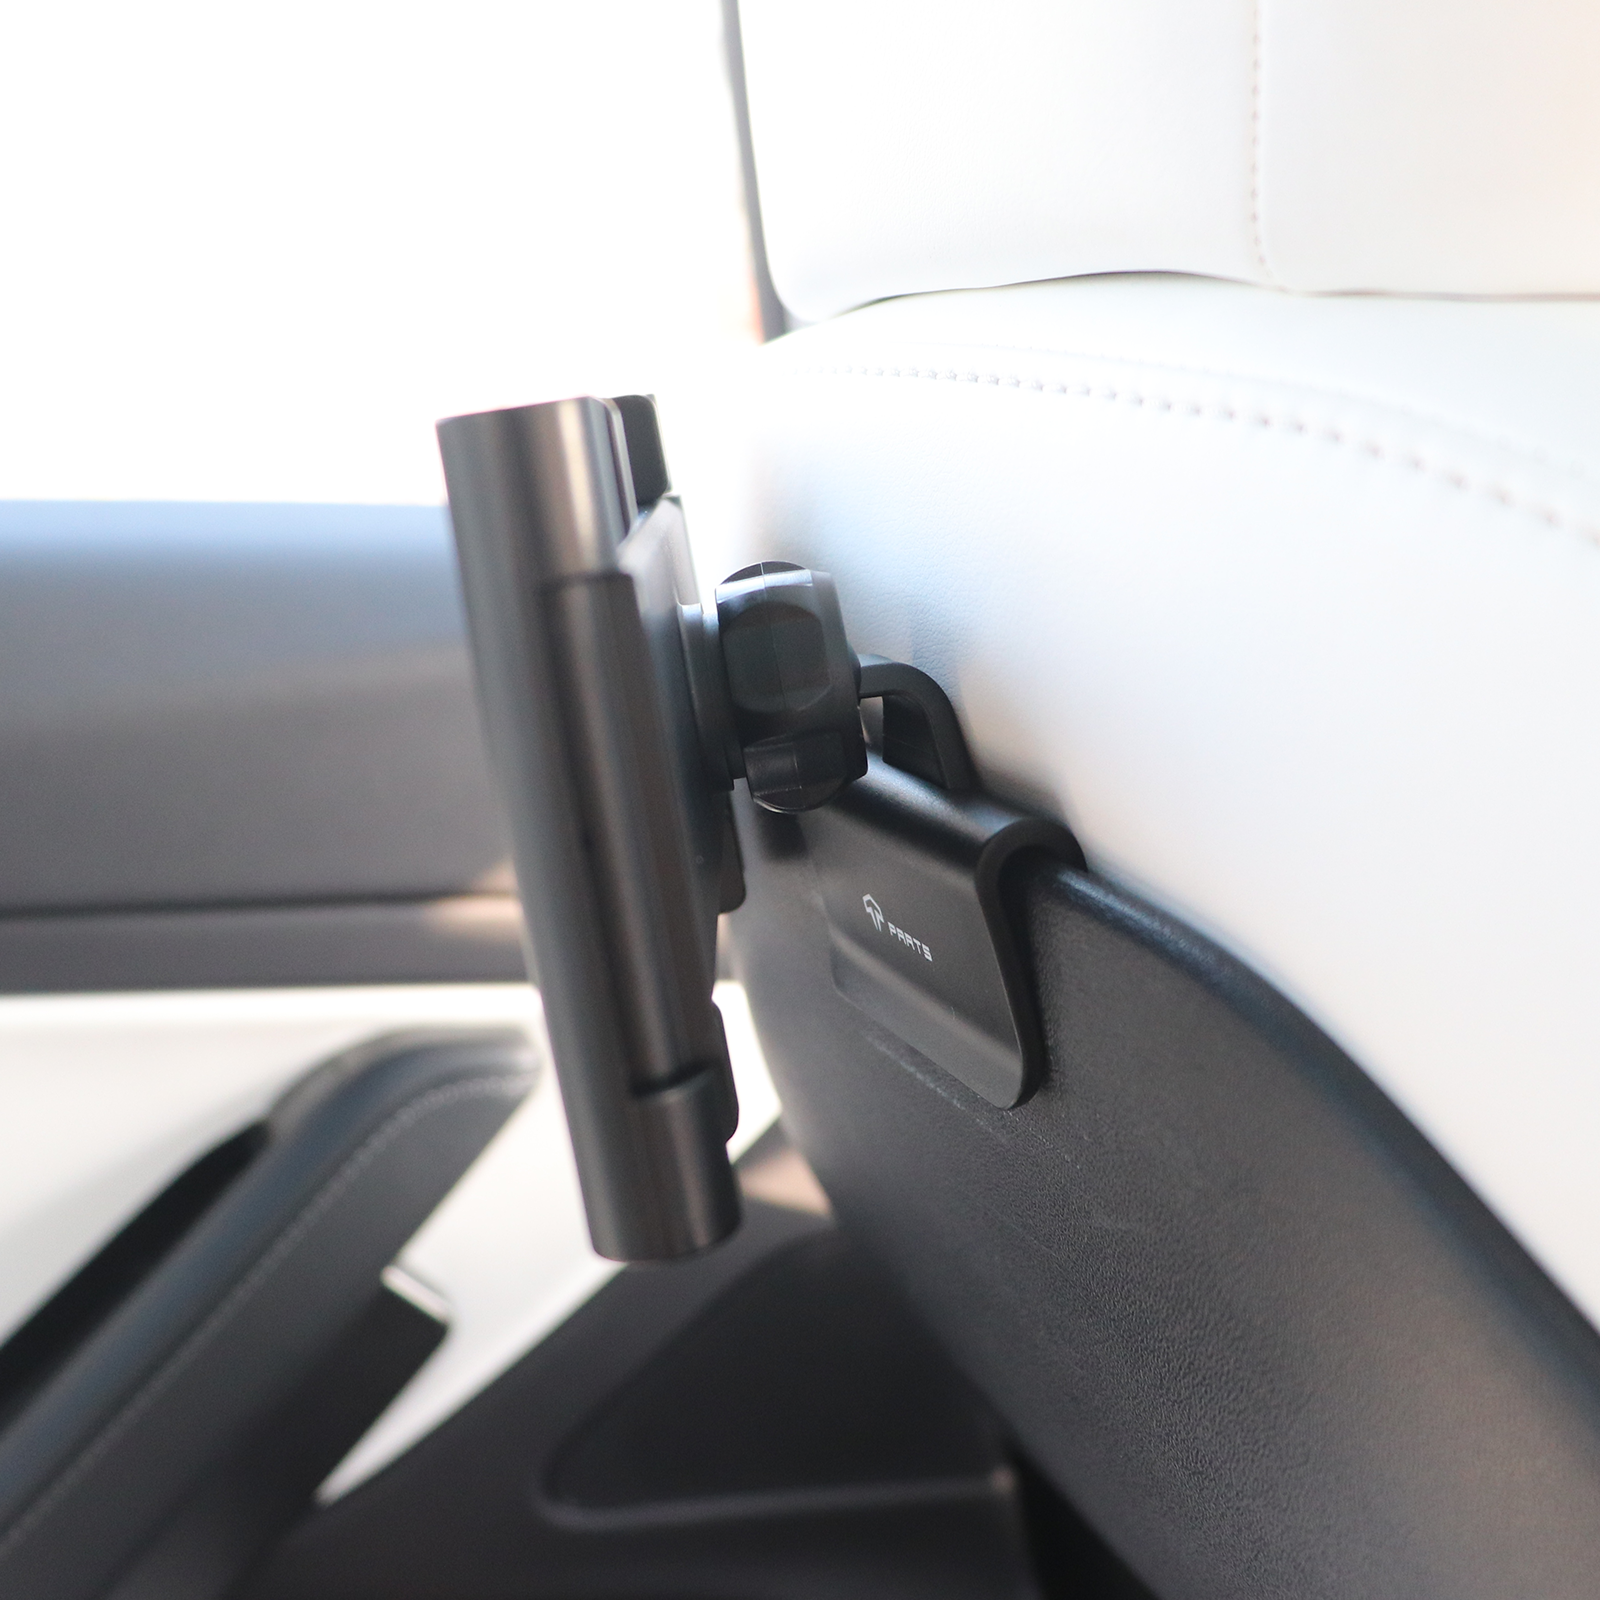  SPEEDPARK for Tesla Accessories Model 3/Y Car Headrest  Mount，Angle Adjustable Headrest Mount，Universal Tablet Holder Phone for Car  Backseat，for 6.3 to 10.5 iPad/Tablet/Smartphone/Nintendo Switch :  Electronics